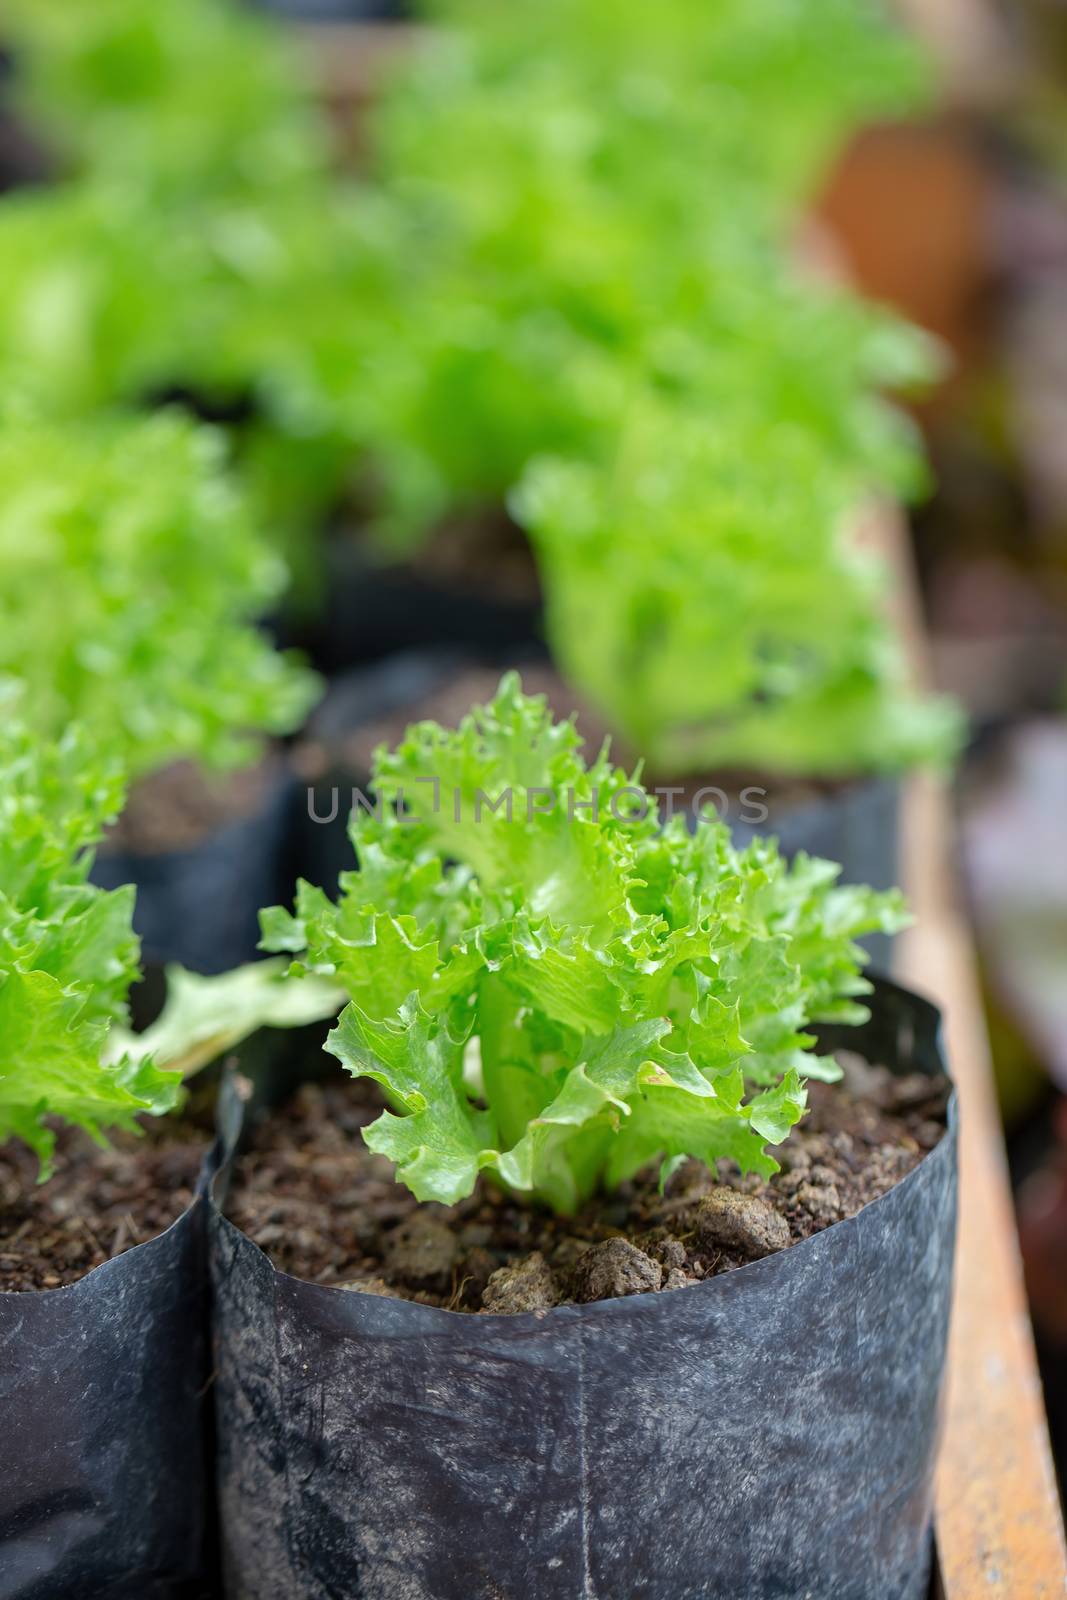 Fresh Green lettuce leaves, Salads vegetable Organic food